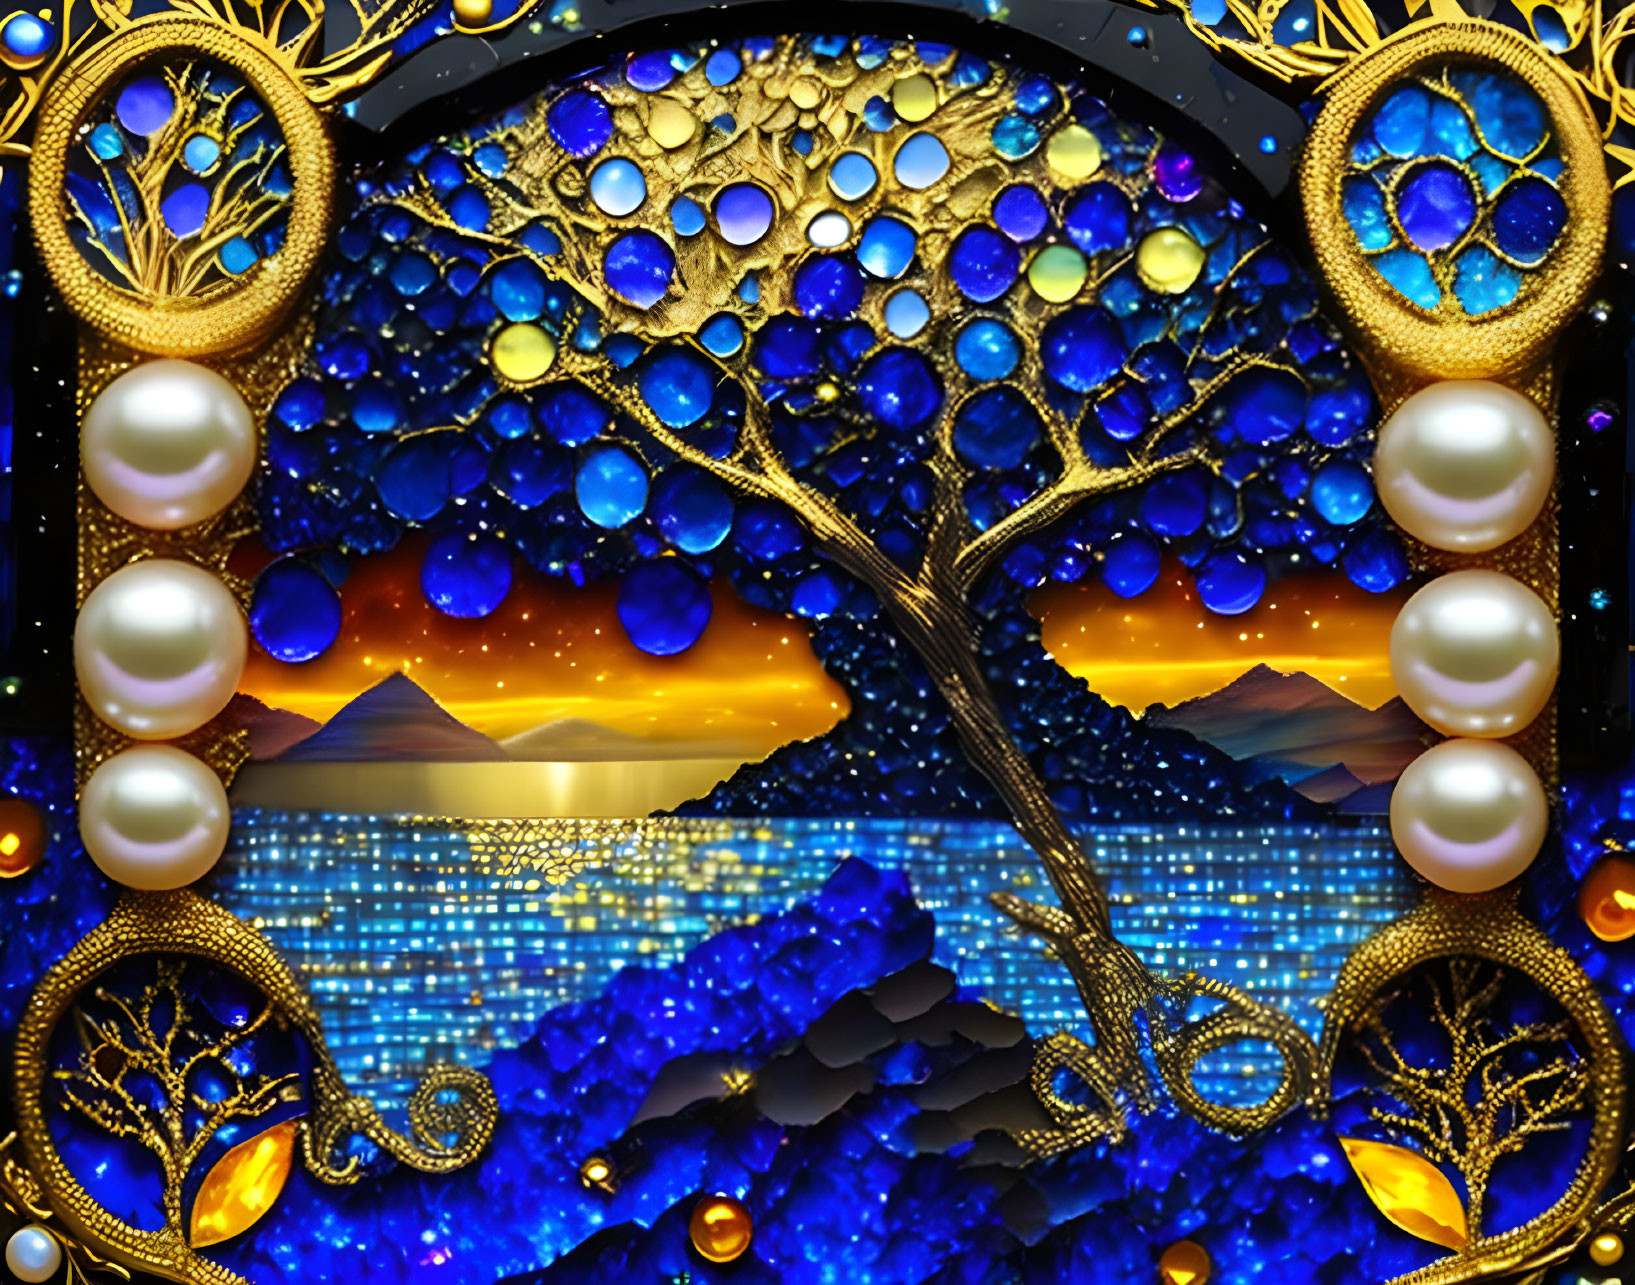 Colorful digital artwork: Golden tree with blue jewels in ornate desert sunset setting